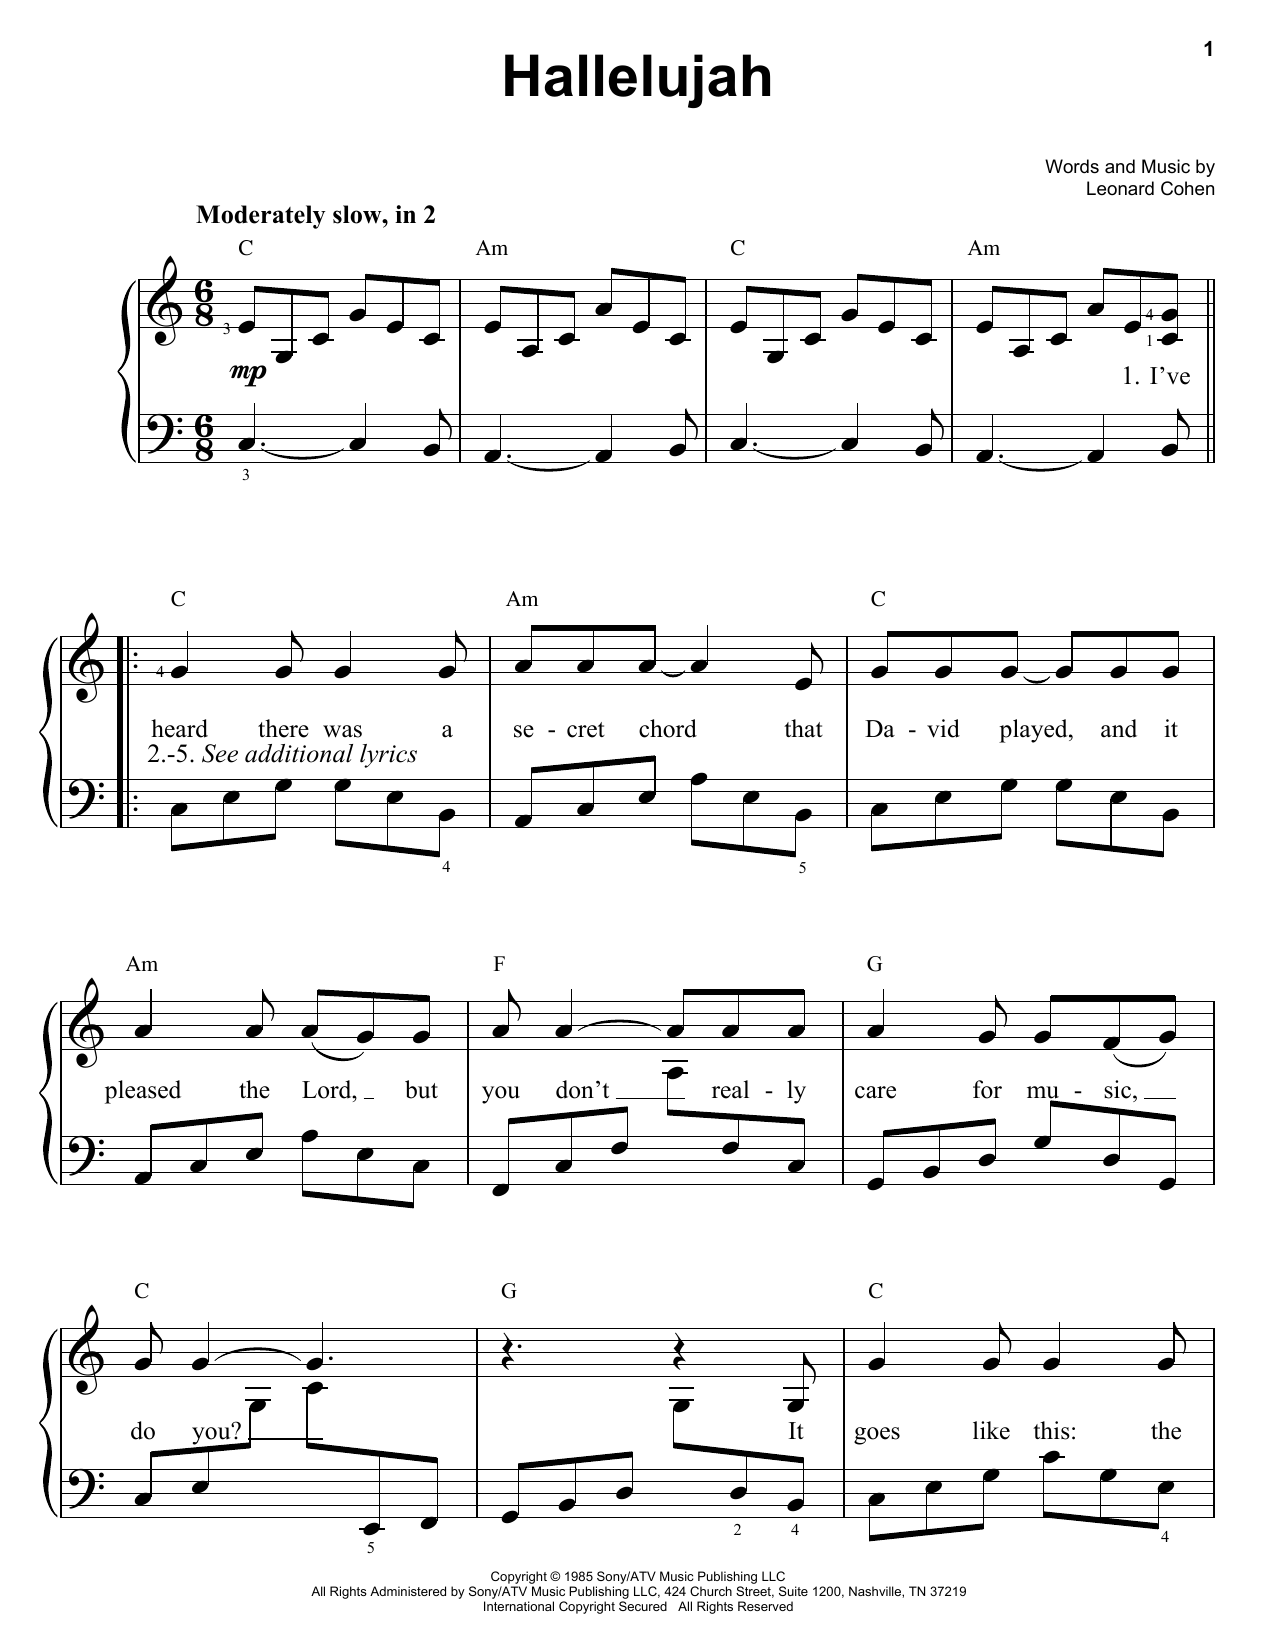 Leonard Cohen Hallelujah Sheet Music Notes & Chords for Ukulele with strumming patterns - Download or Print PDF